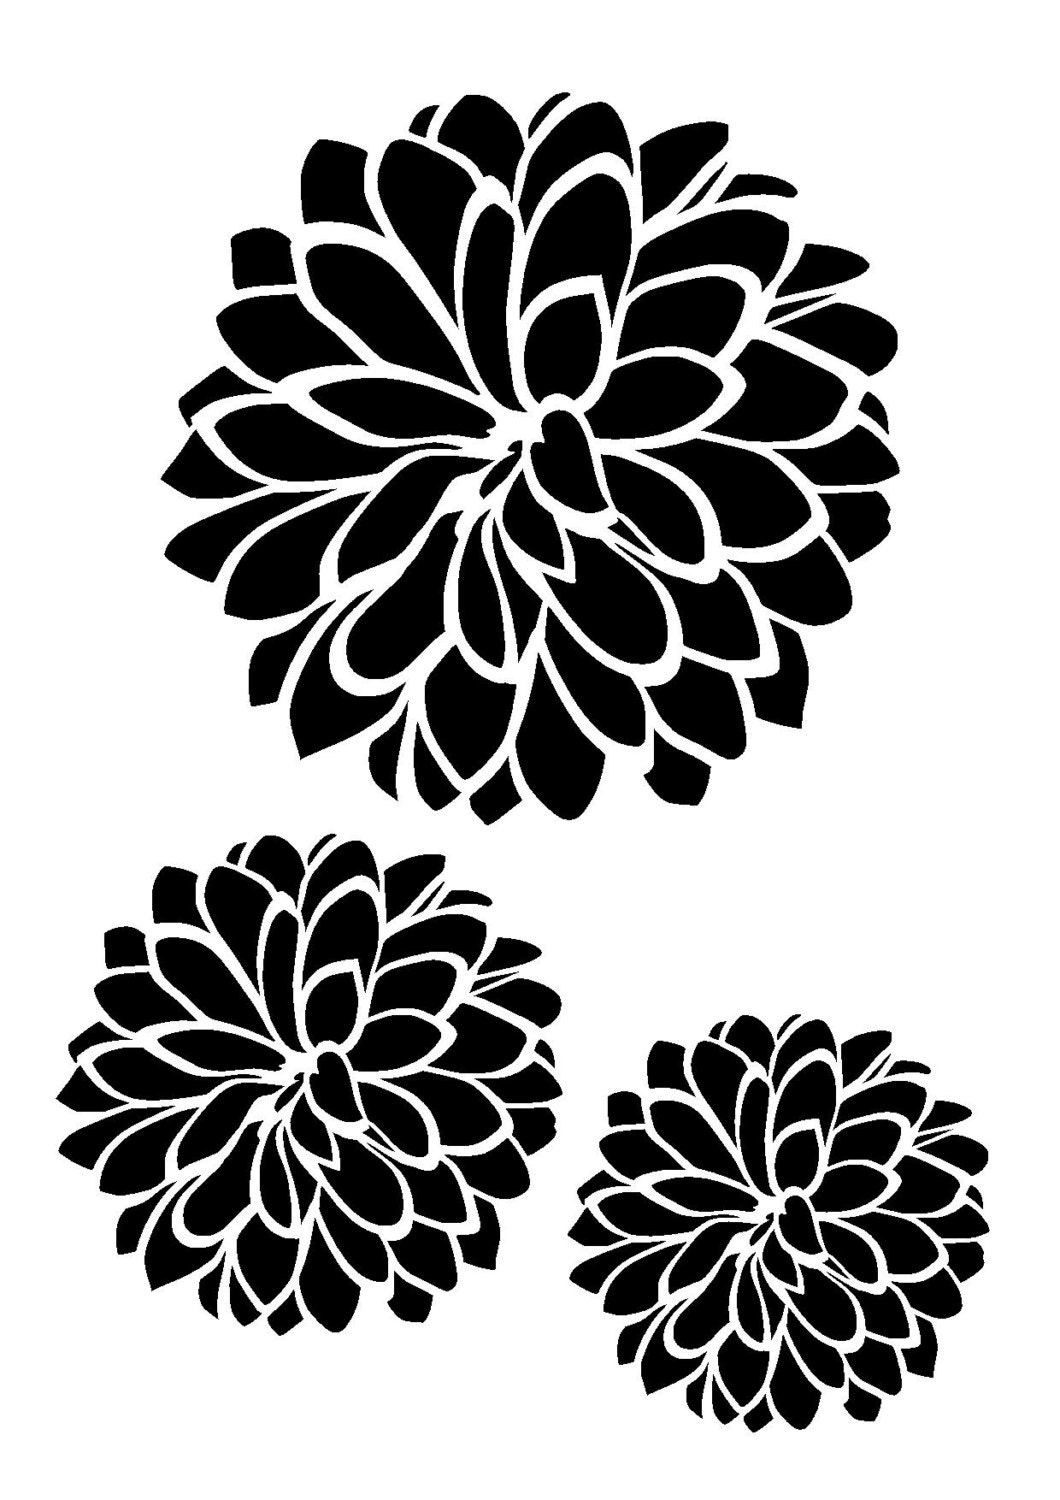 Download 11.7/16.5 Dhalia flower stencil 3 flowers. A3.